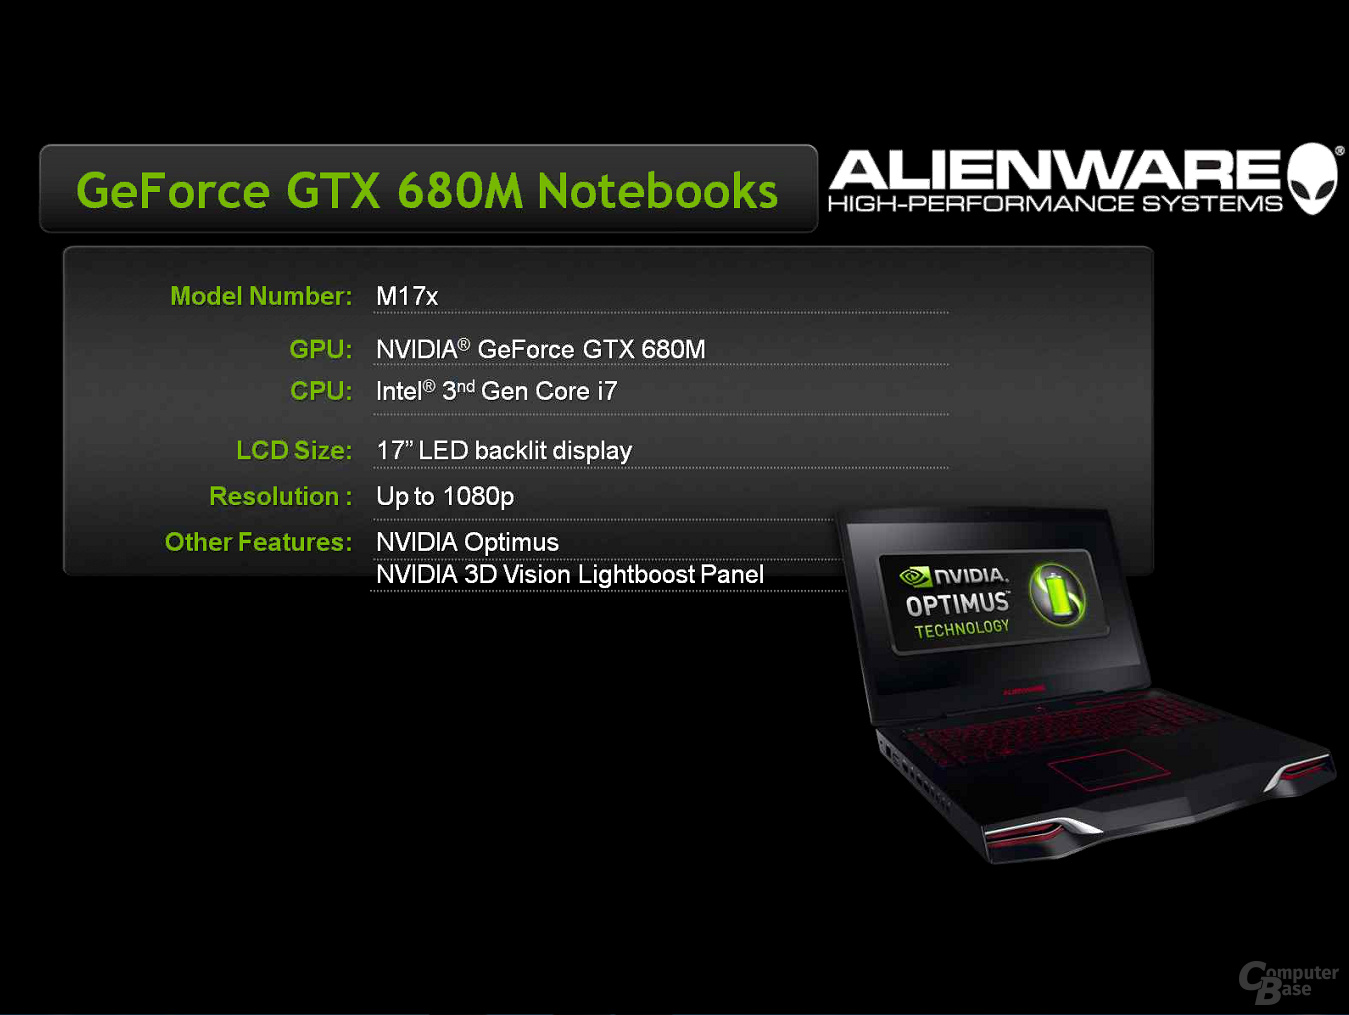 Nvidia GeForce GTX 680M